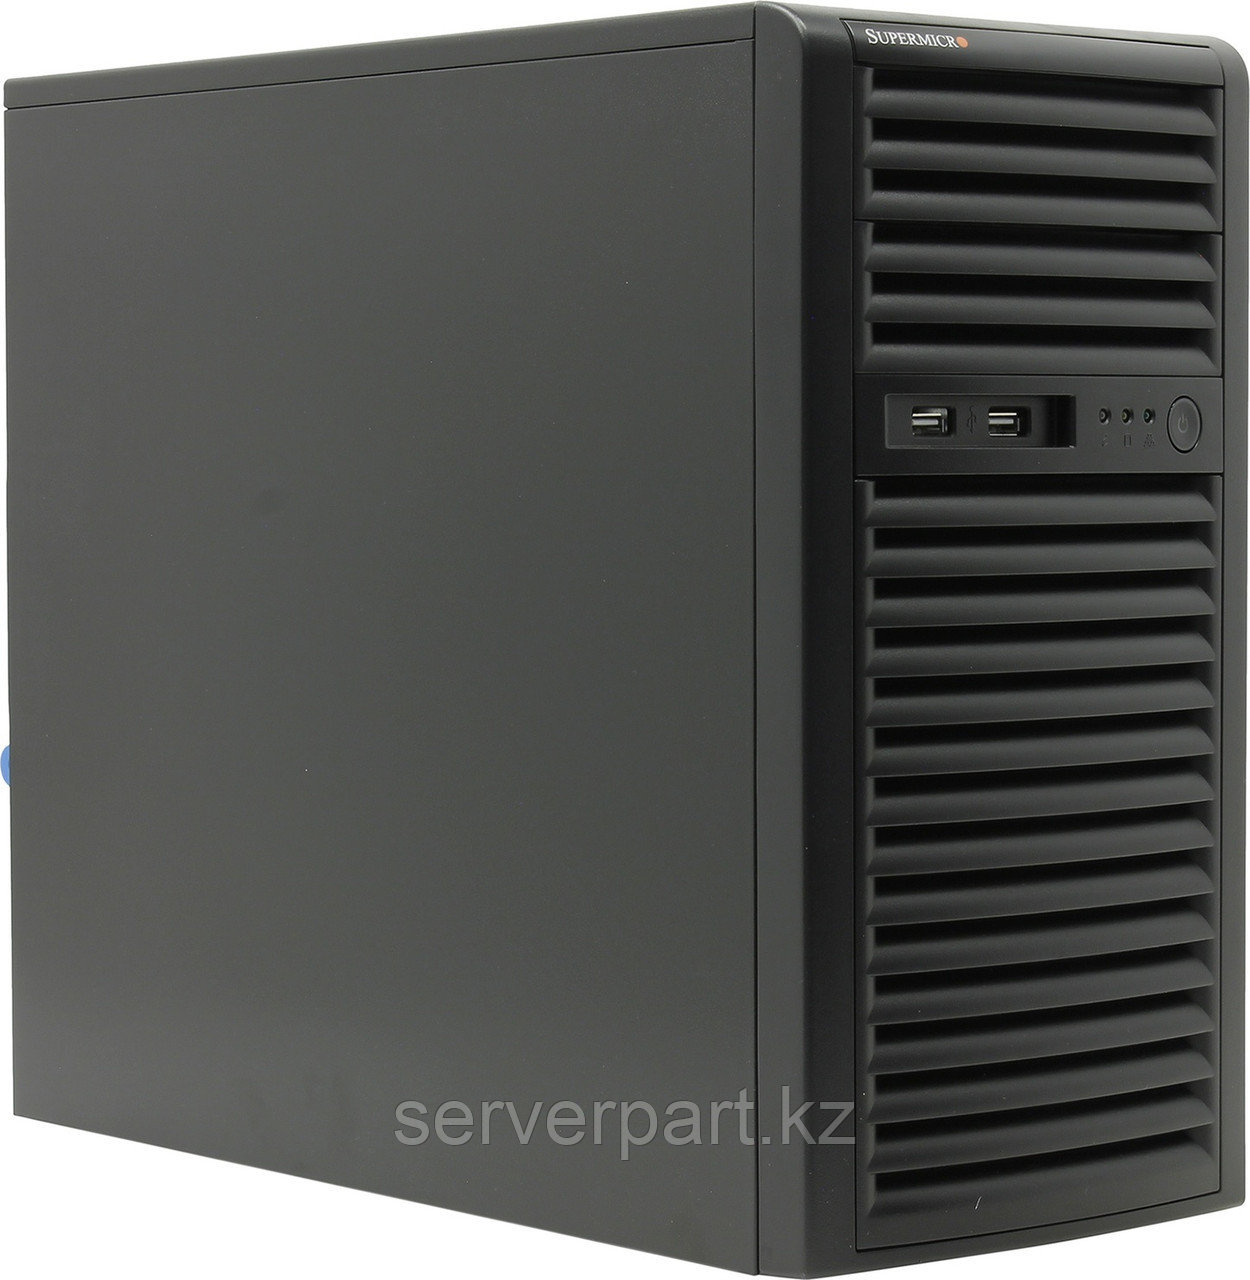 Сервер Supermicro SYS-5039C Tower 4LFF/4-core intel xeon E2124 3.3GHz/16GB EUDIMM/2x480GB SSD RI Hyb